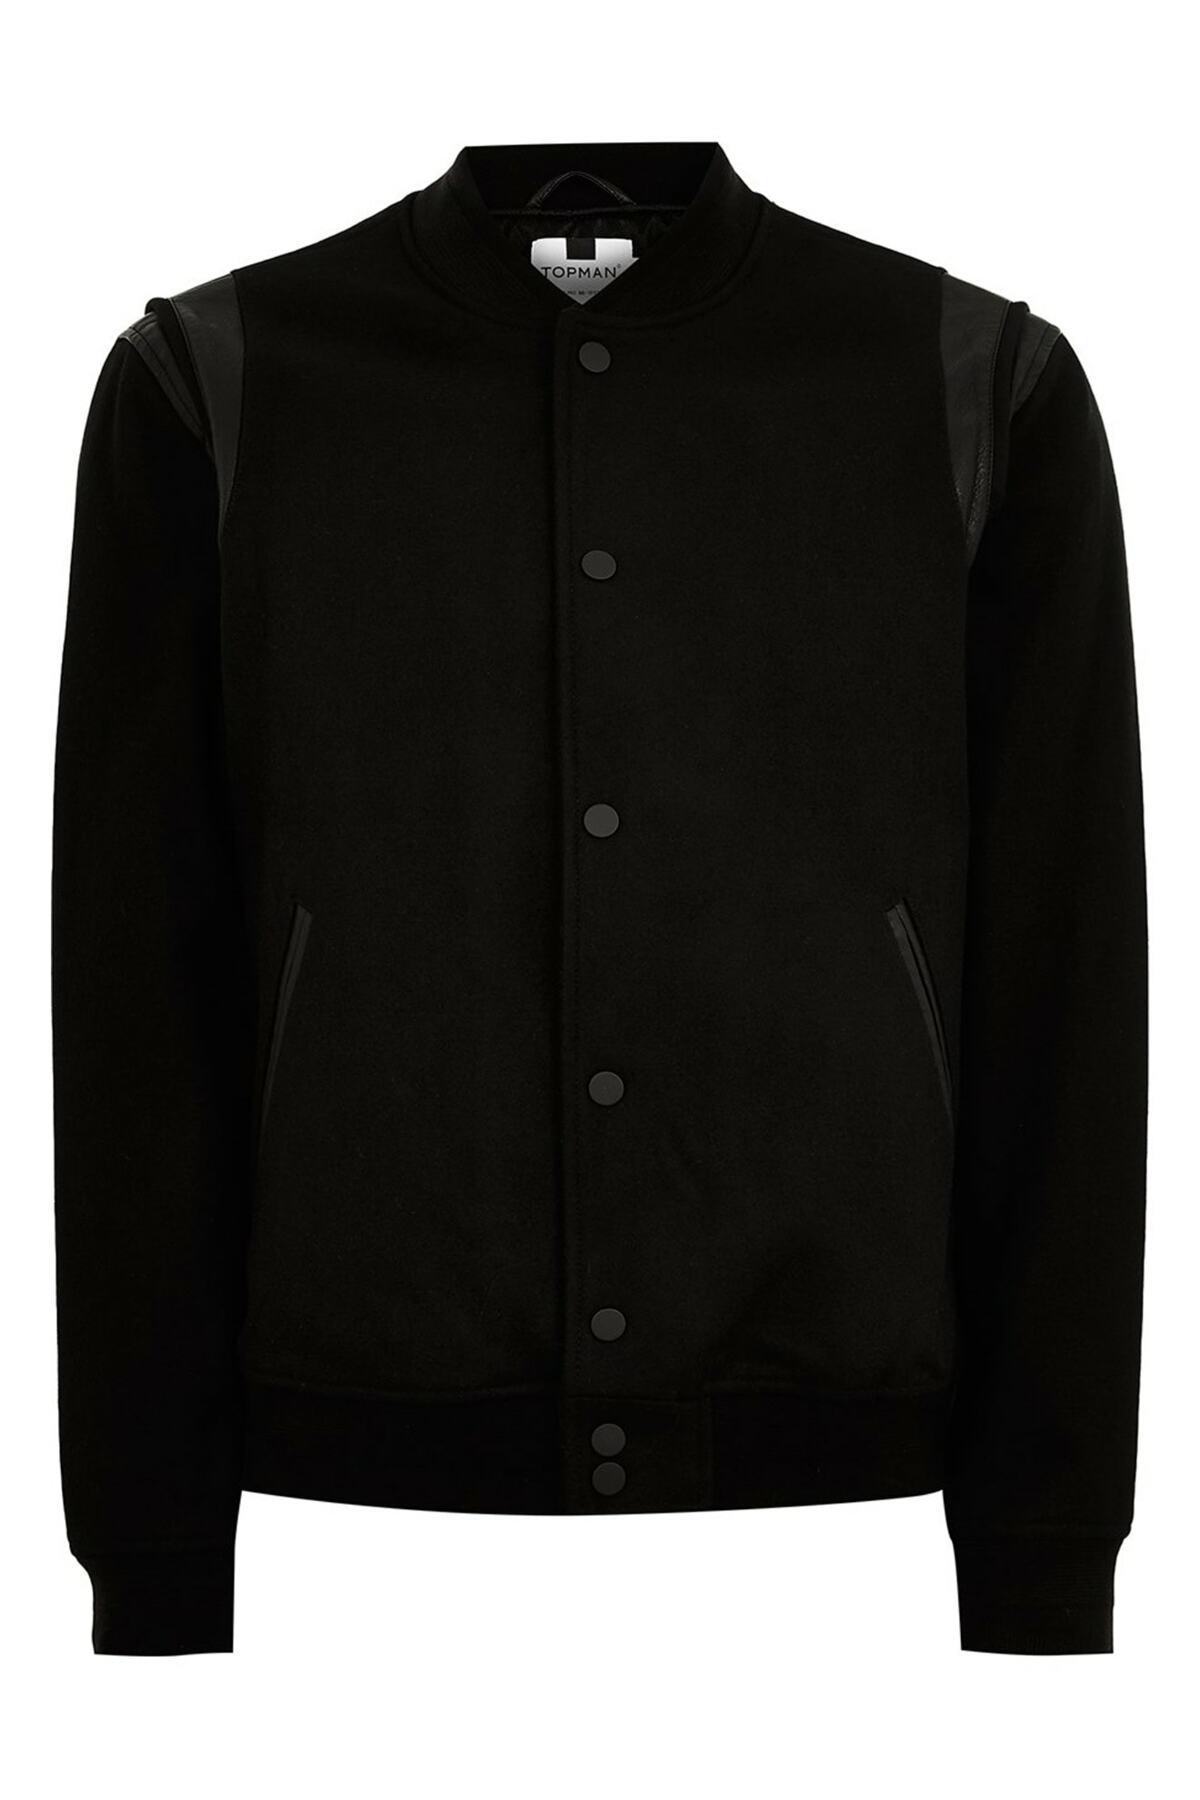 TOPMAN Wool Blend Varsity Jacket in Black for Men - Lyst